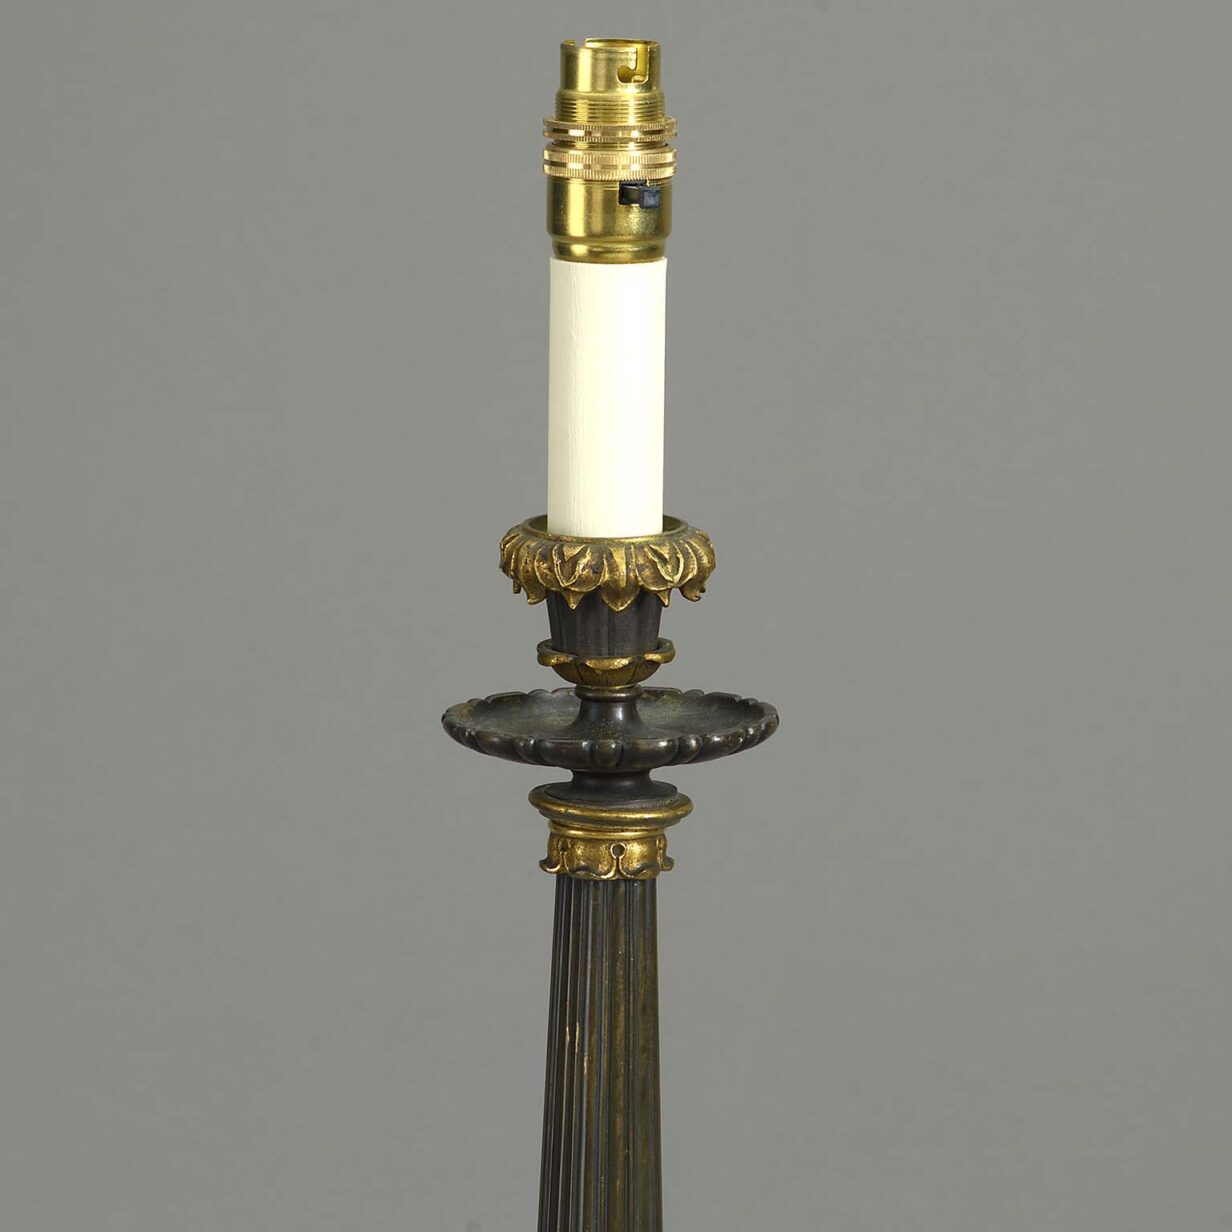 Antique bronze candlestick lamp